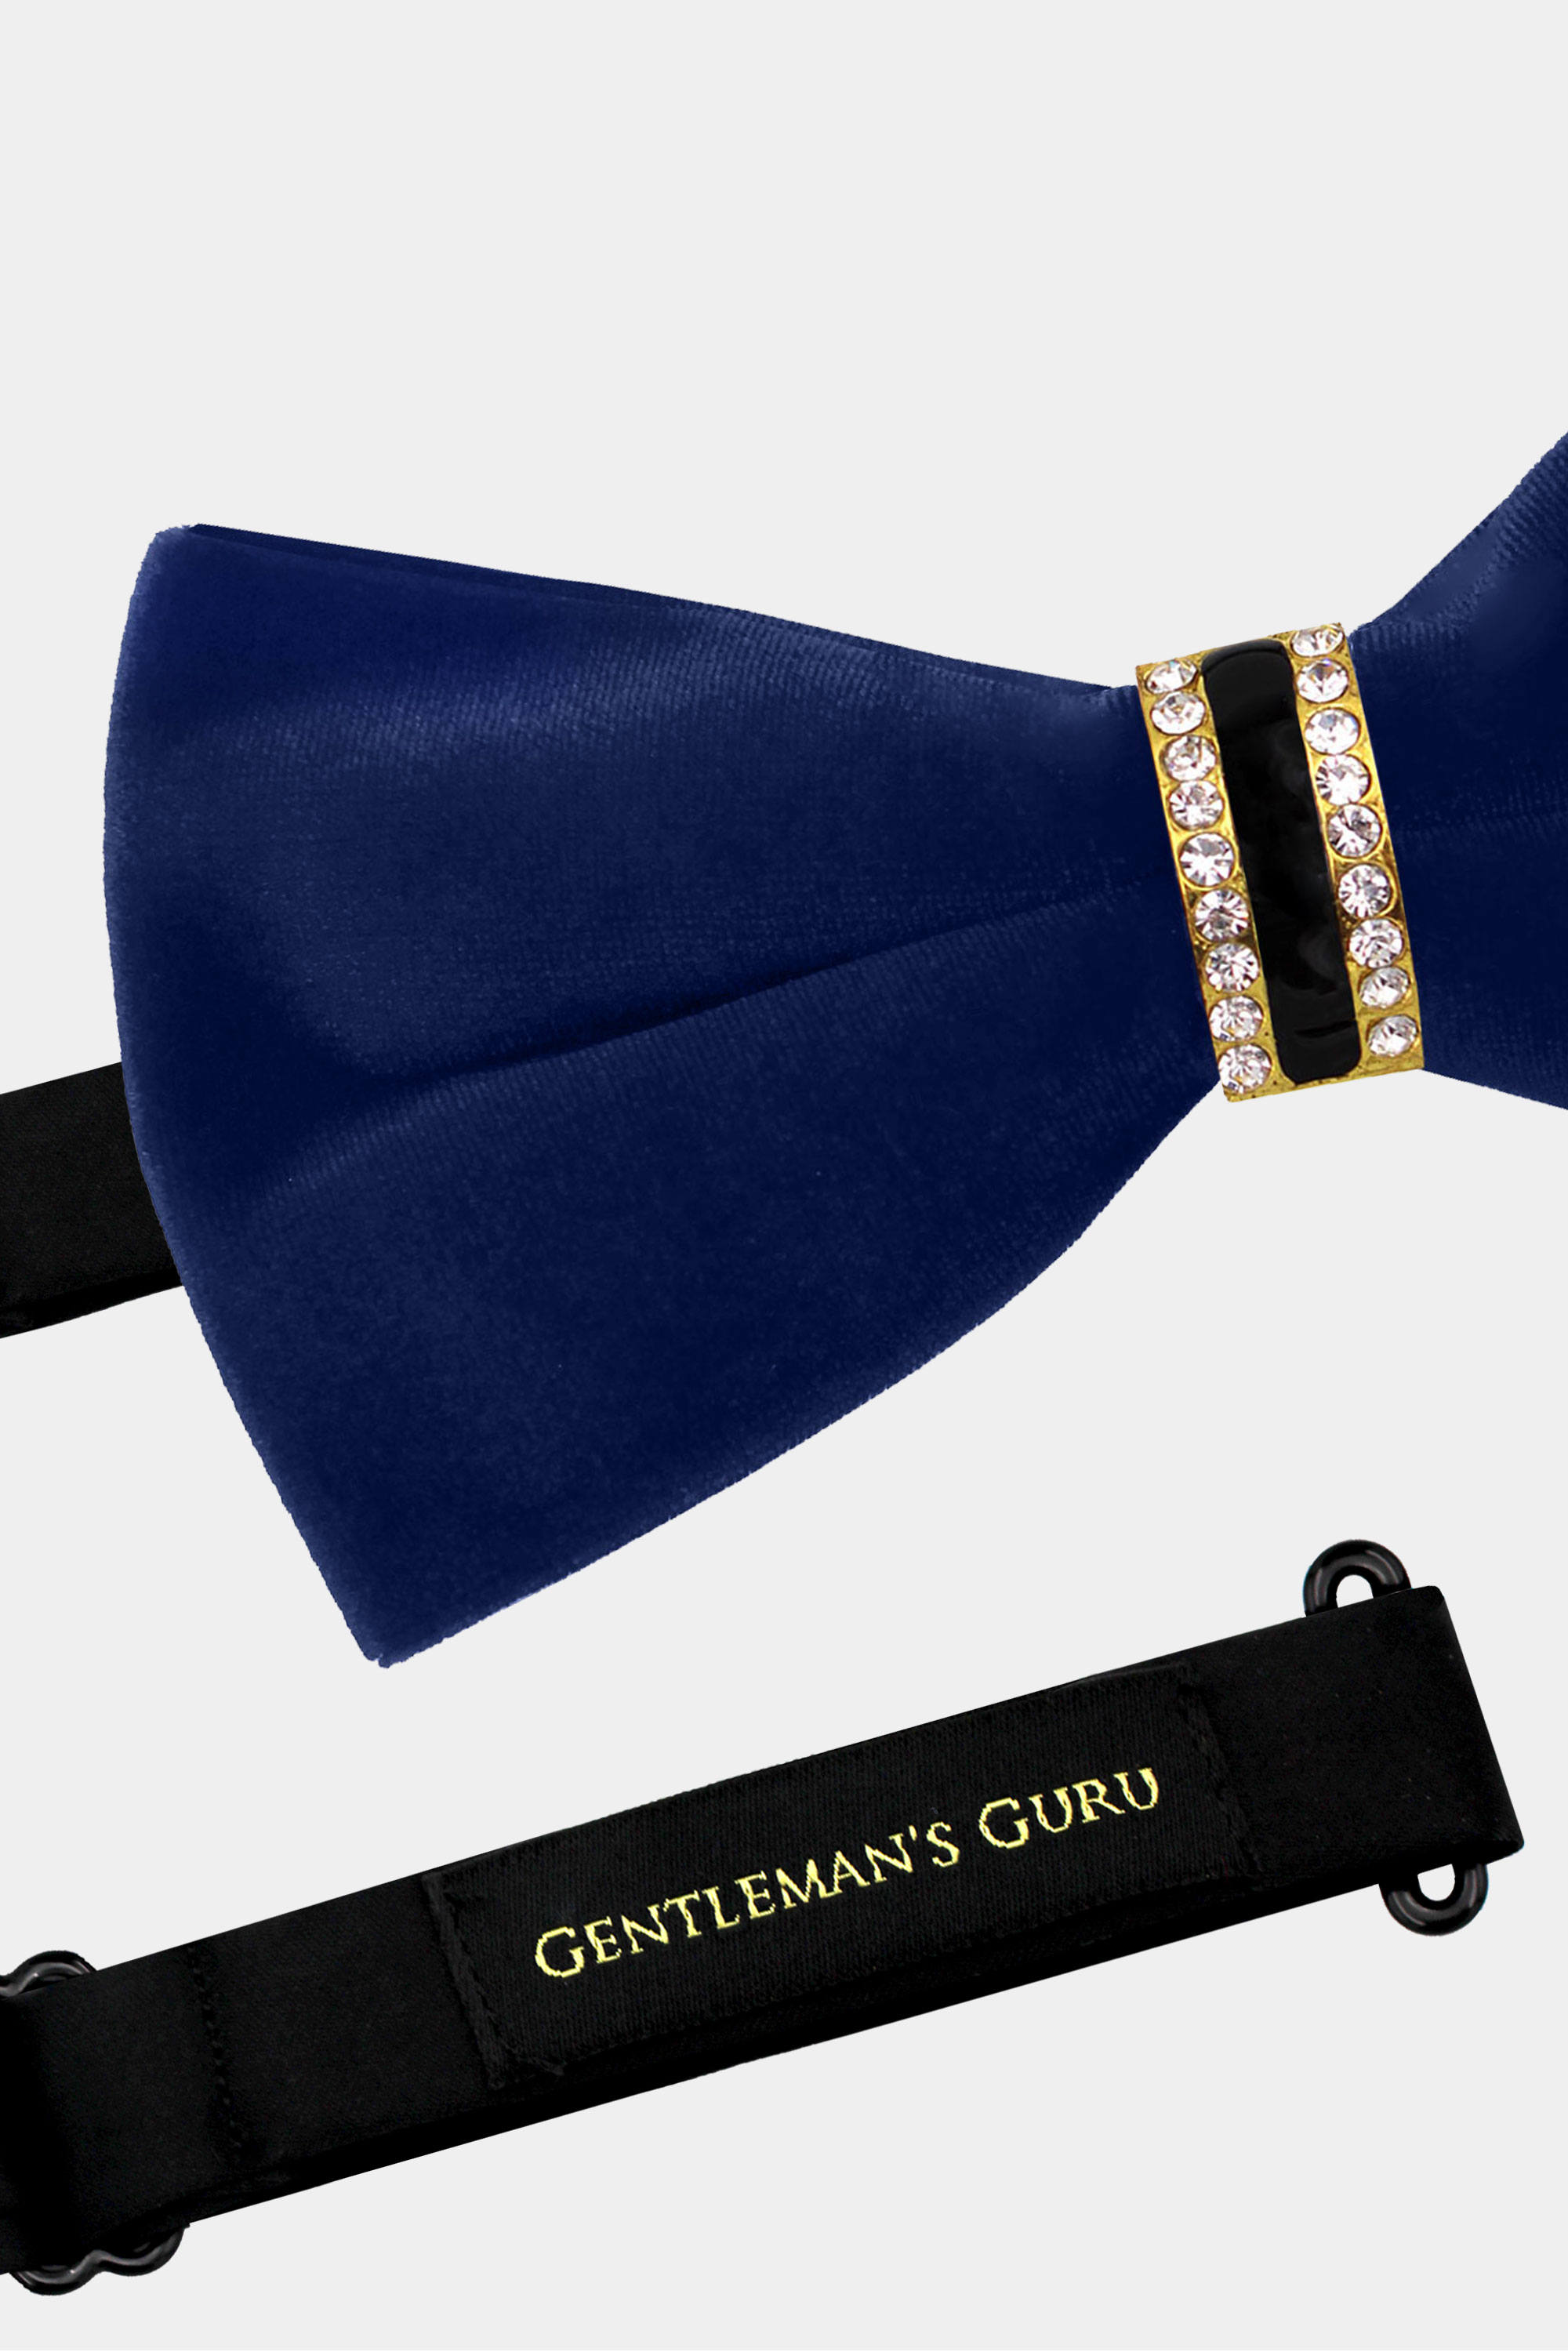 Crystal-Navy-Blue-Velvet-Bow-Tie-from-Gentlemansguru.com